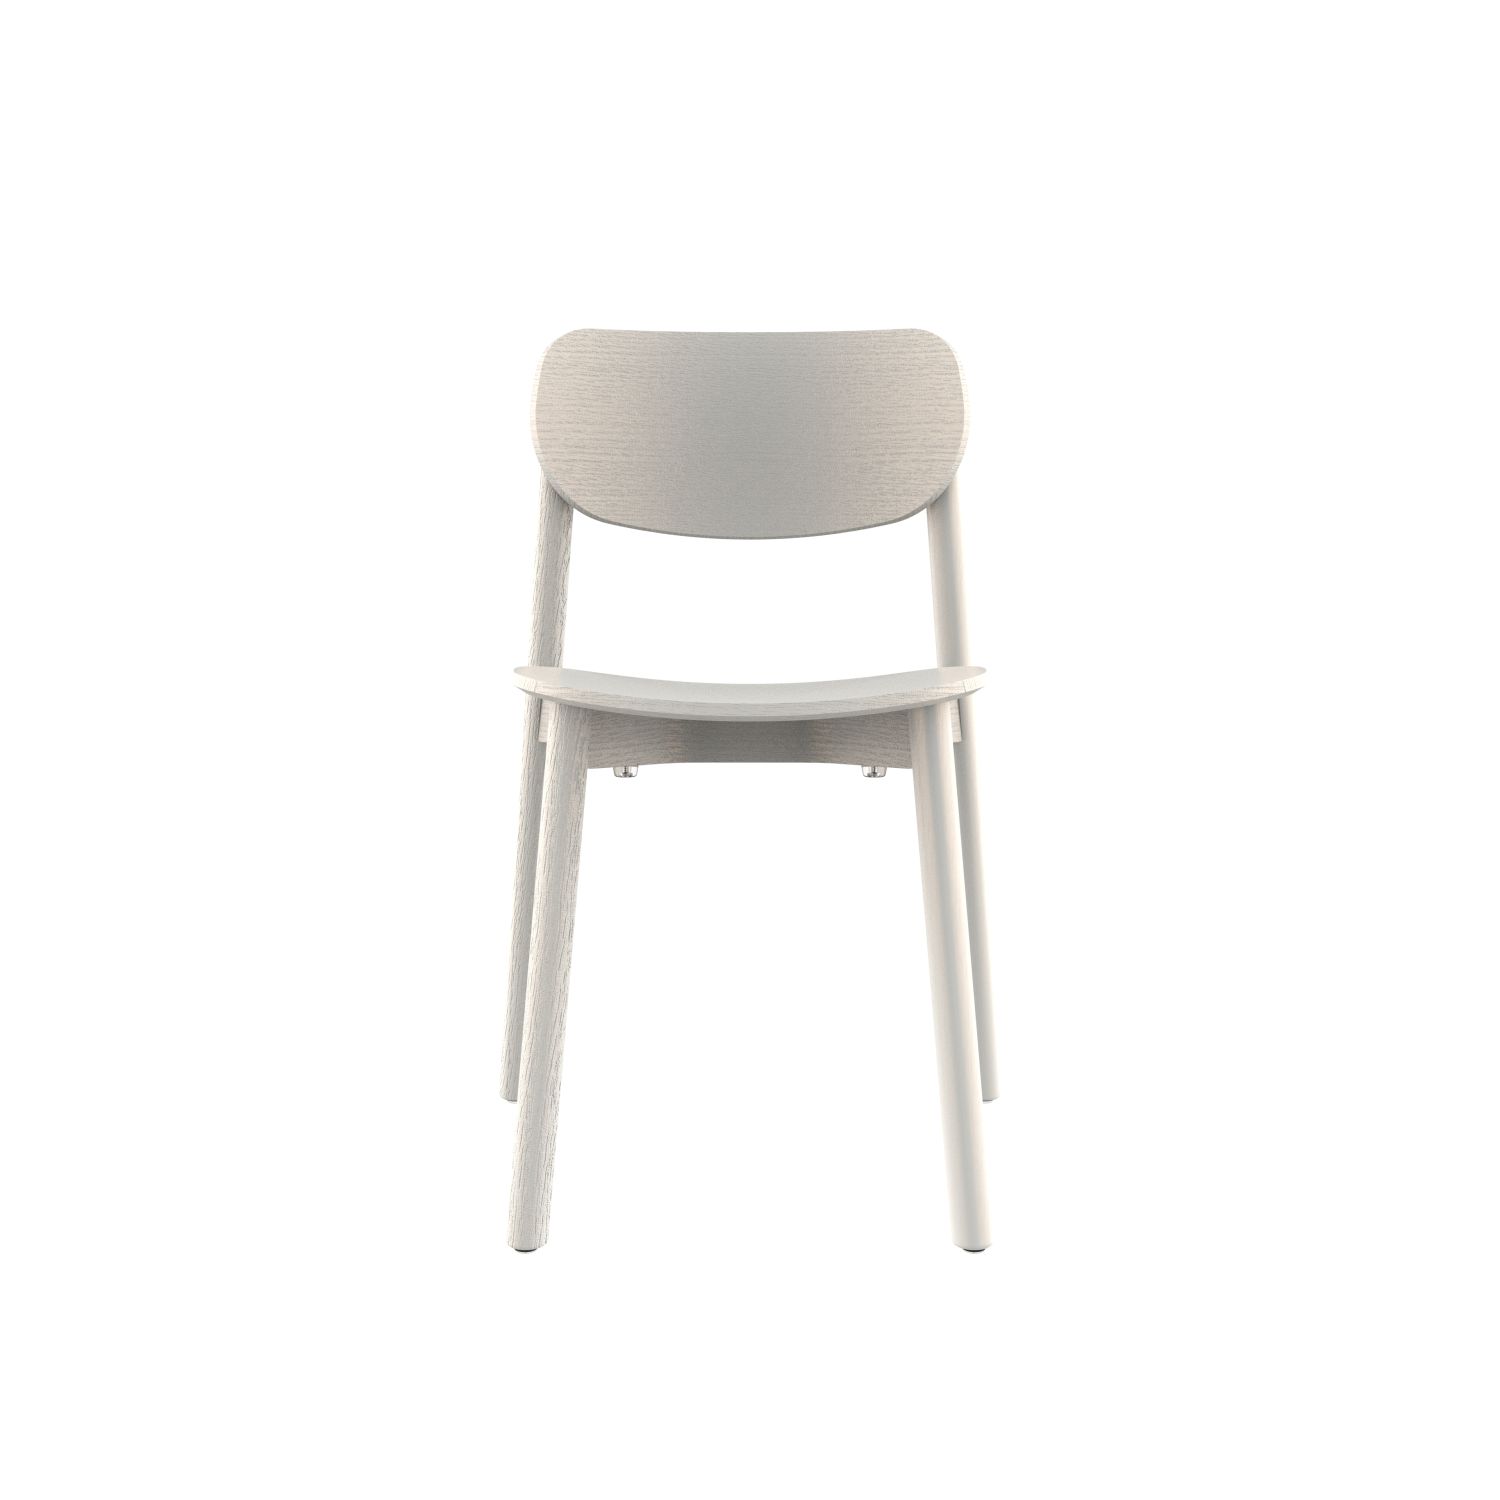 lensvelt studio stefan scholten 2thrd chair stackable no armrests signal white ral9003 hard leg ends